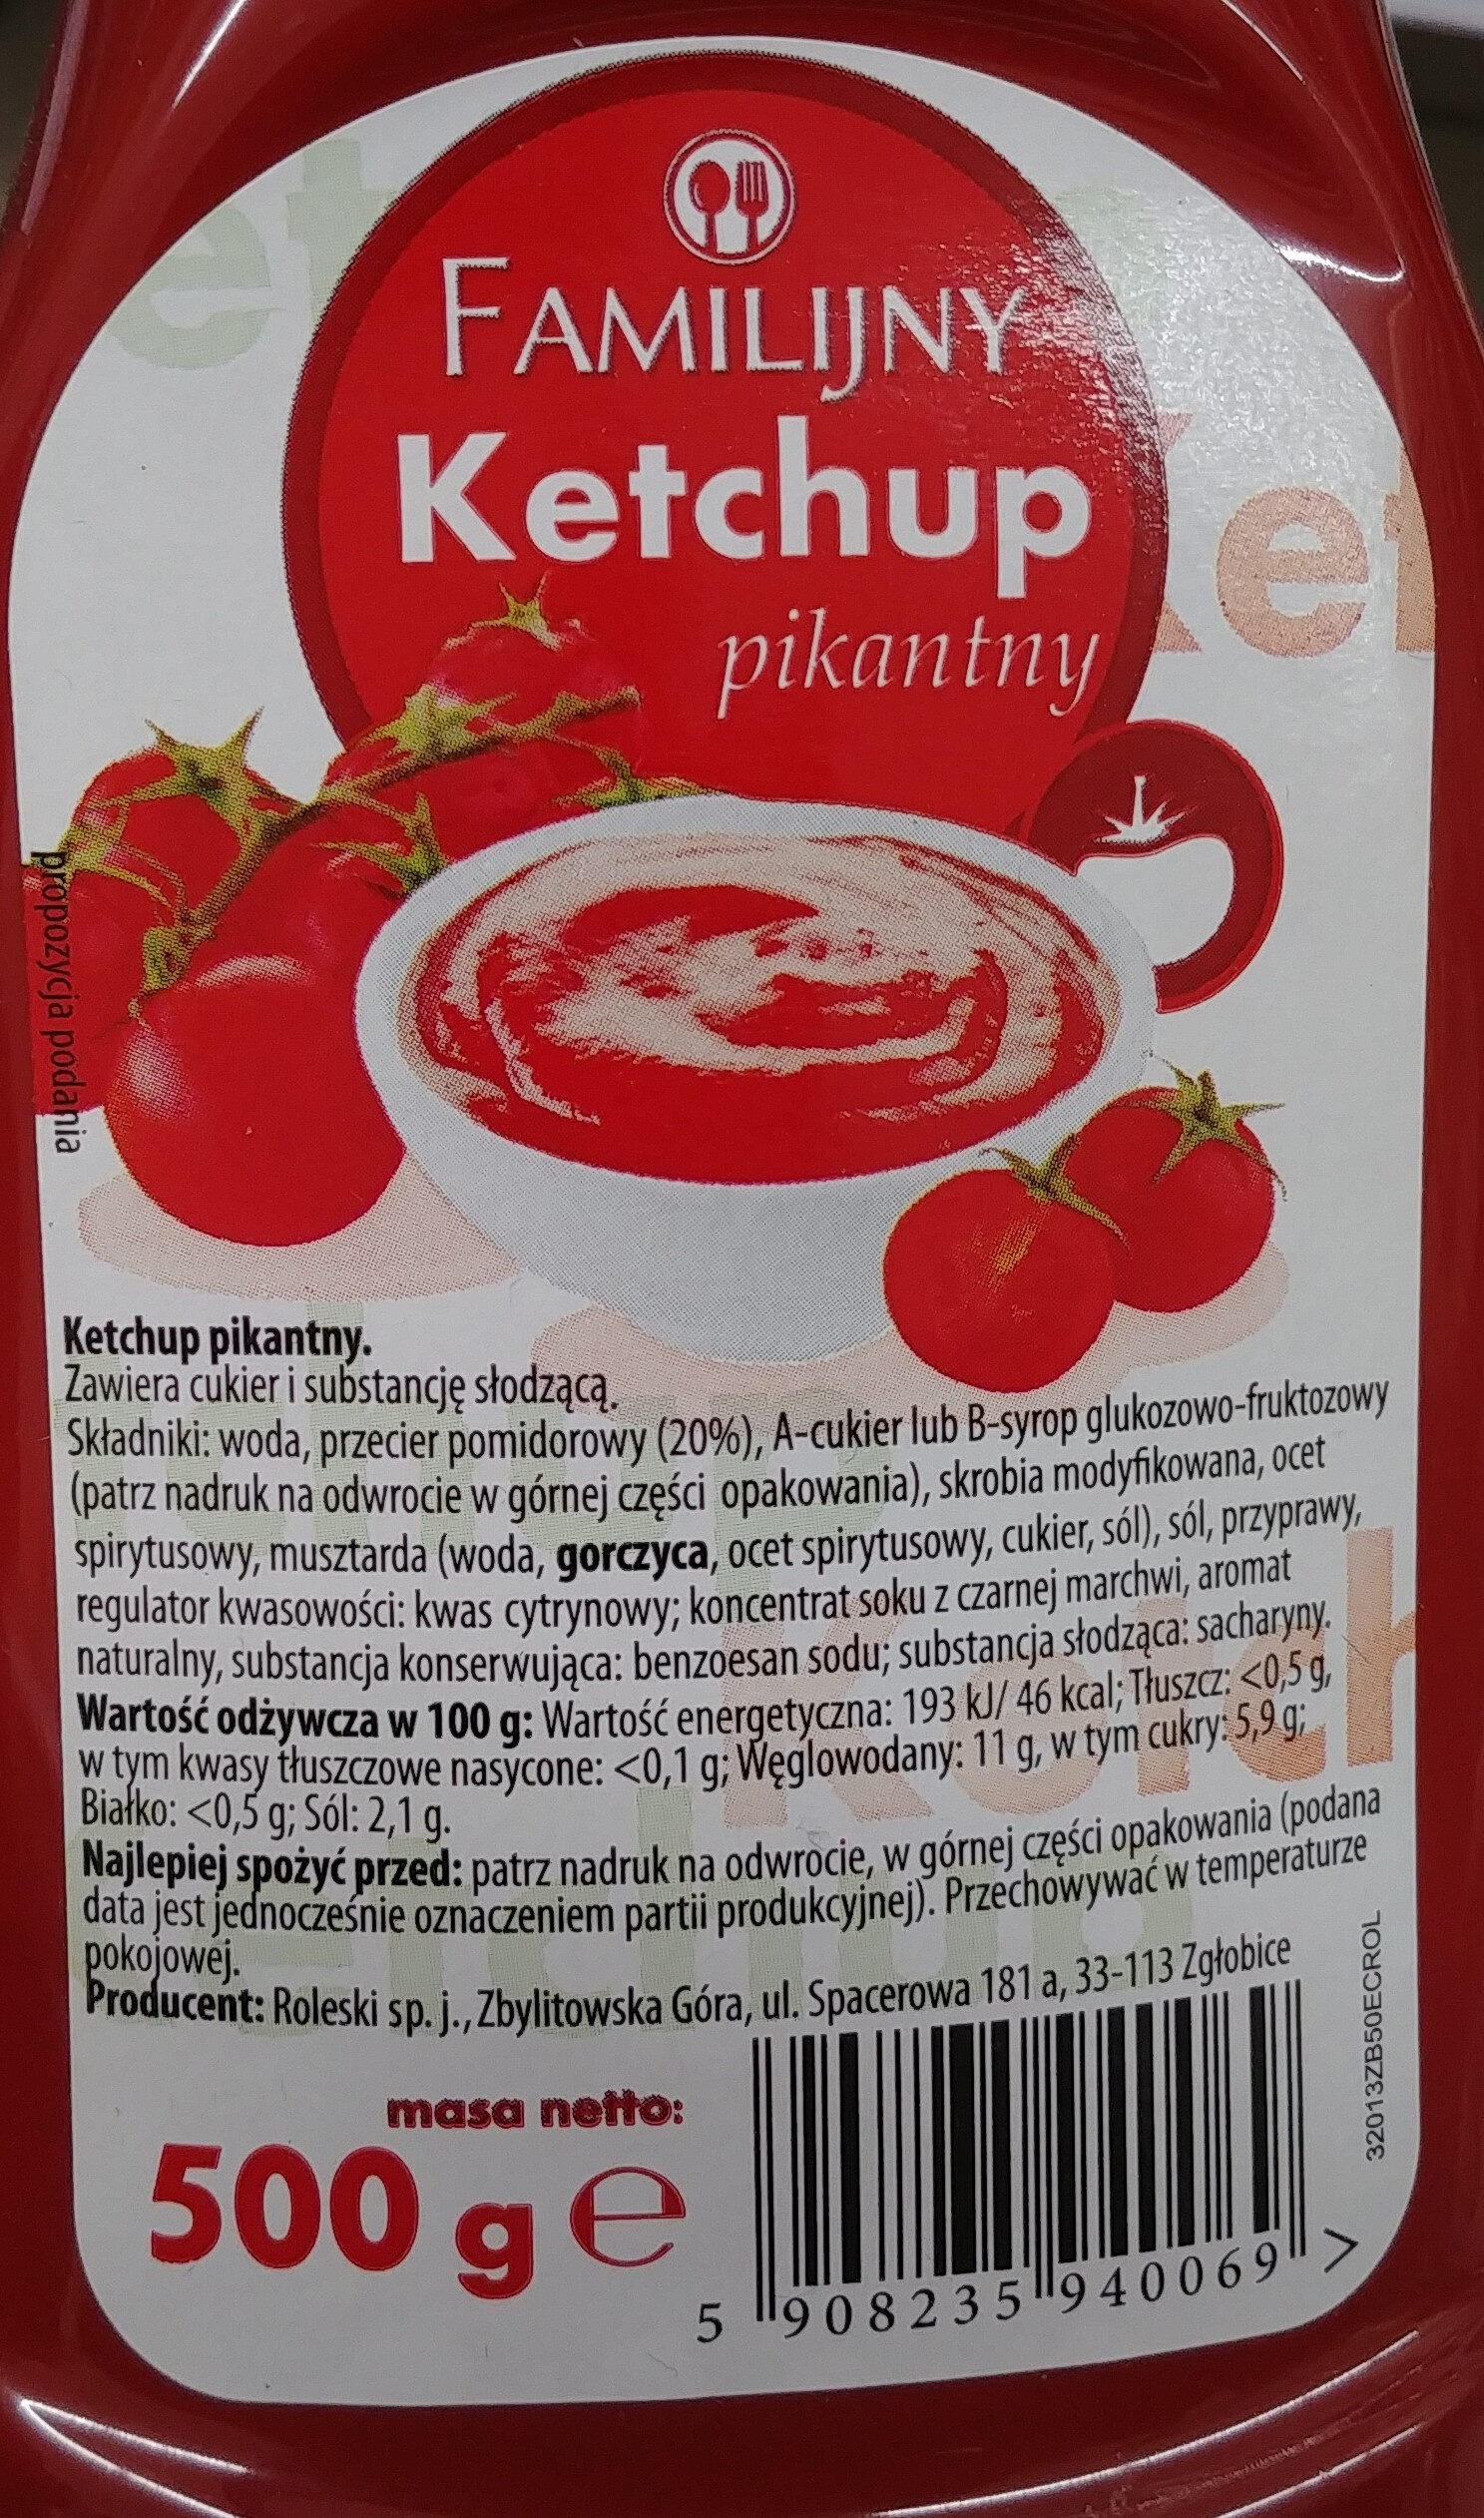 Ketchup pikantny - Product - pl